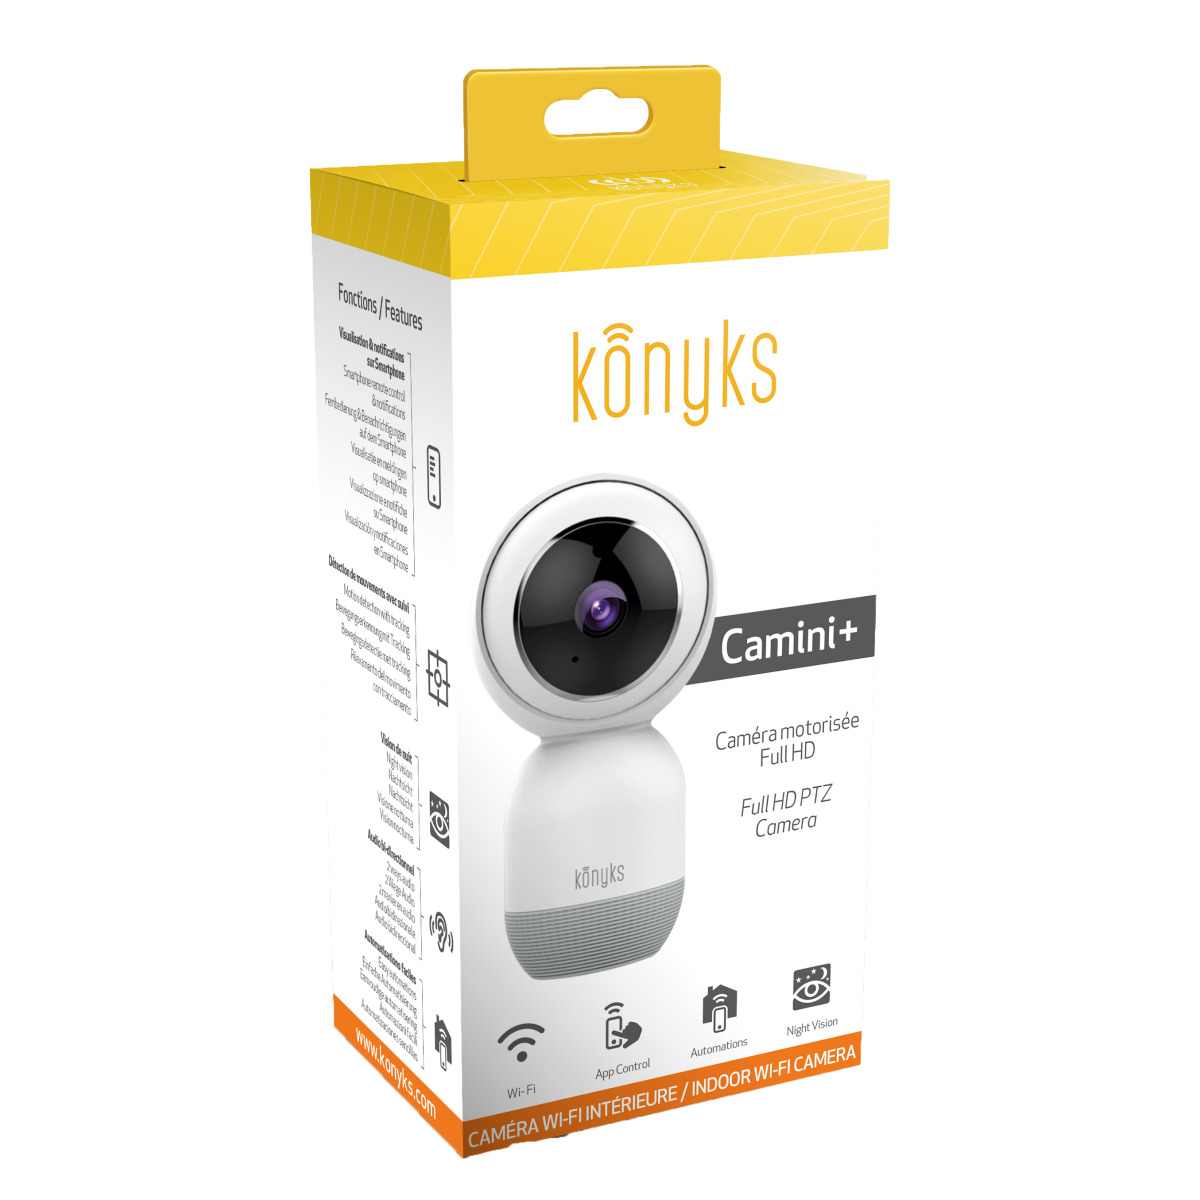 Caméra de surveillance connectée Konyks Camini+ - Caméra Wi-Fi Full HD Tracker